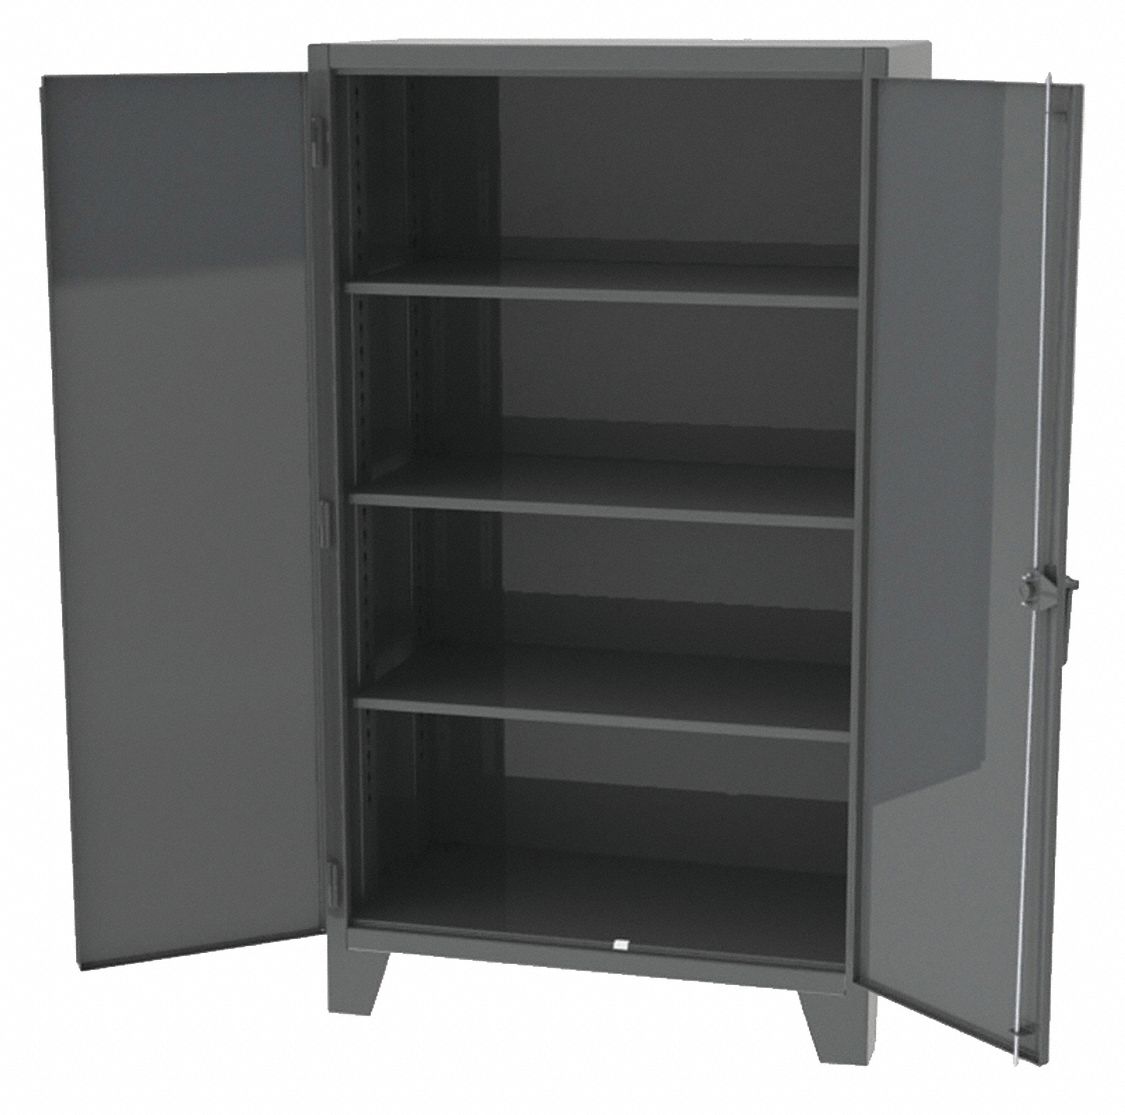 GREENE MANUFACTURING, INC. Heavy Duty Storage Cabinet, Charcoal, 72